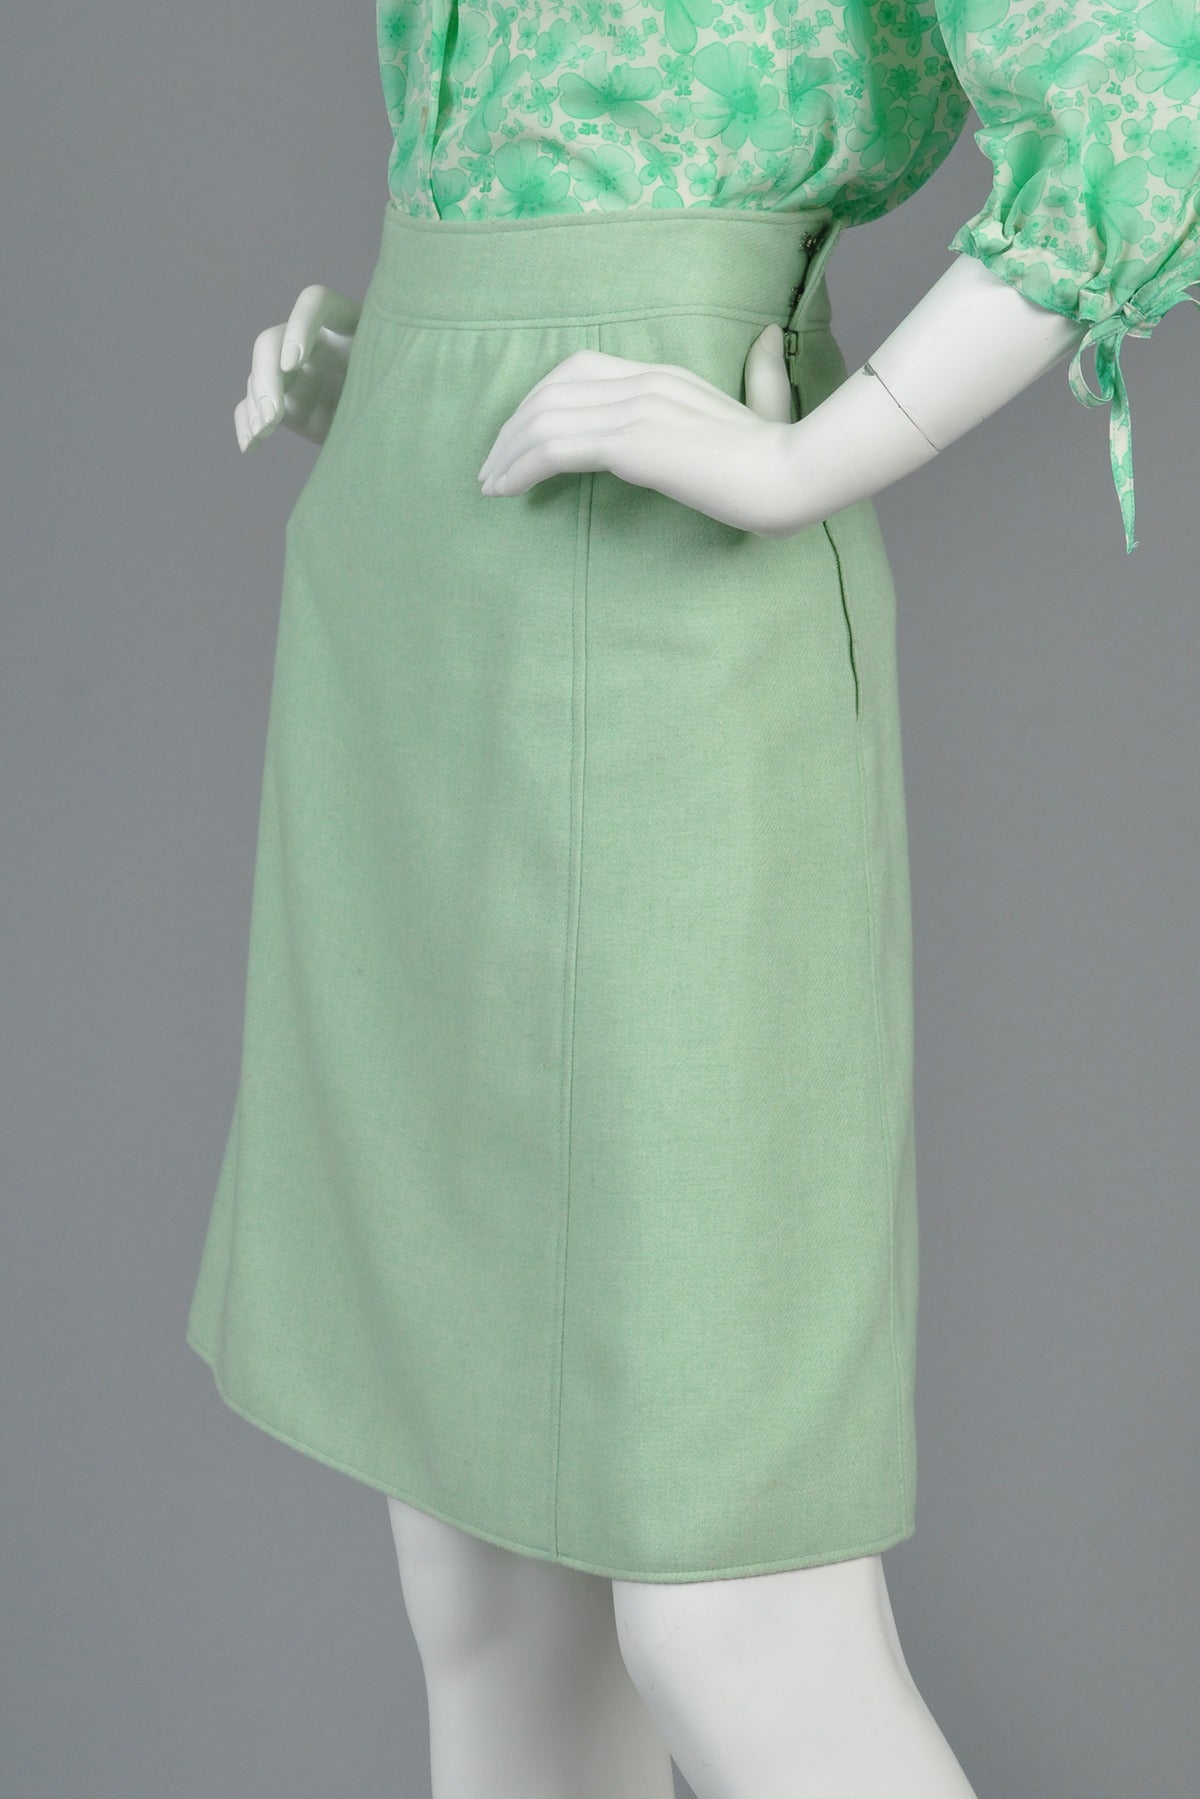 Women's 1960s Courrèges Numbered Green Wool Blend Skirt